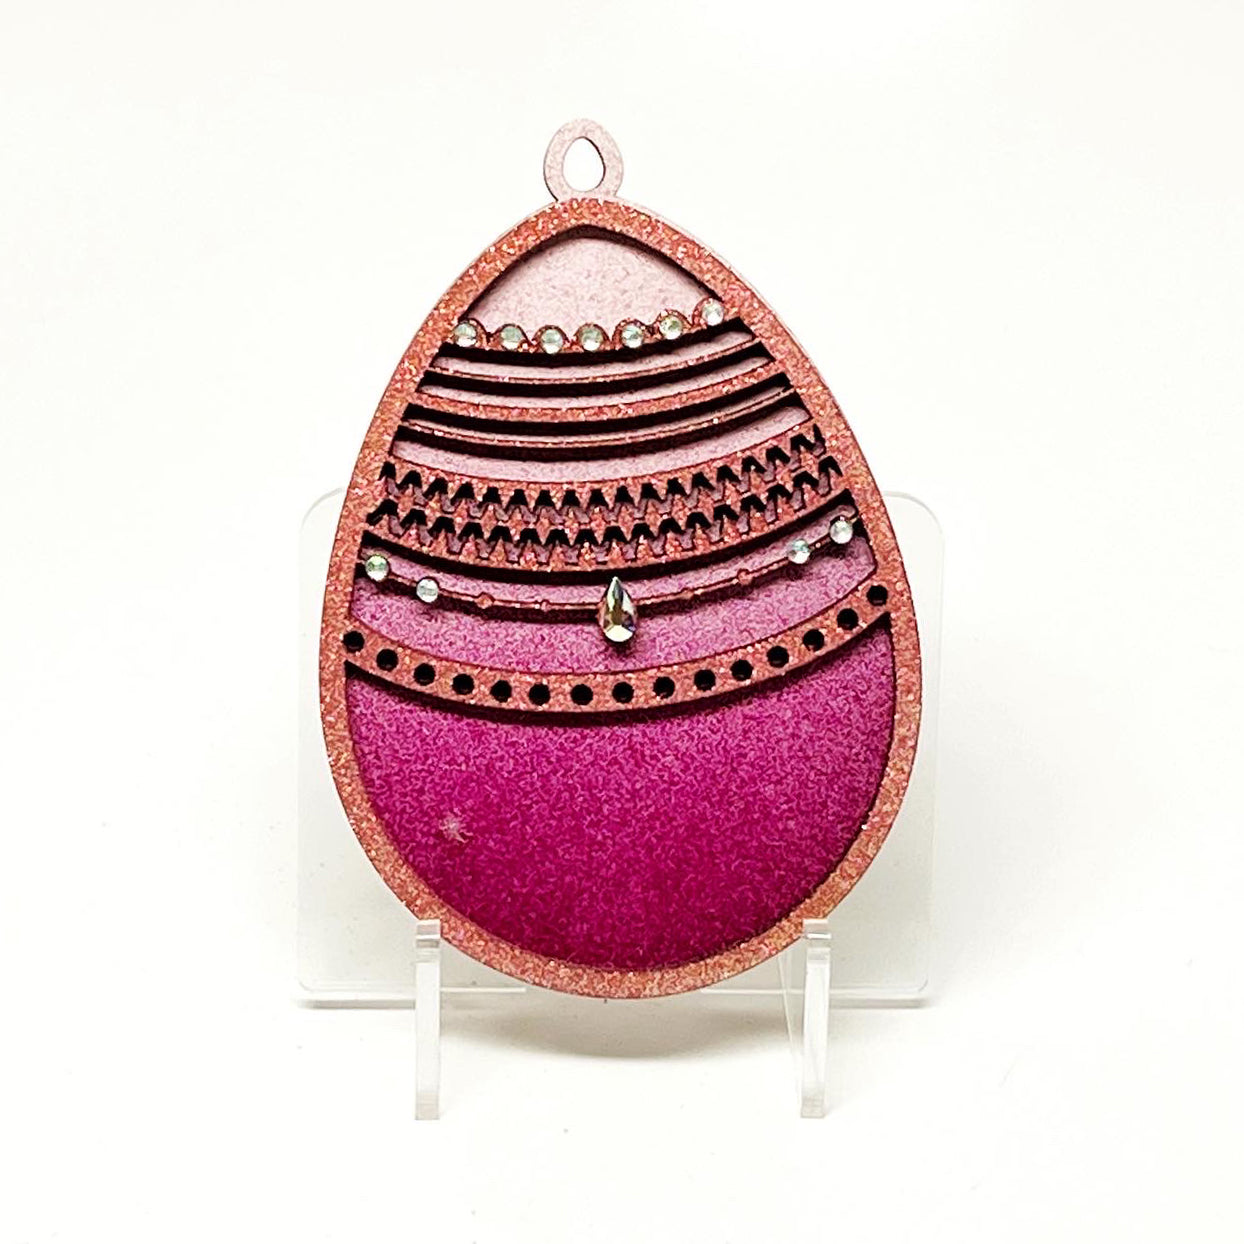 Bandeau Jeweled Egg Design